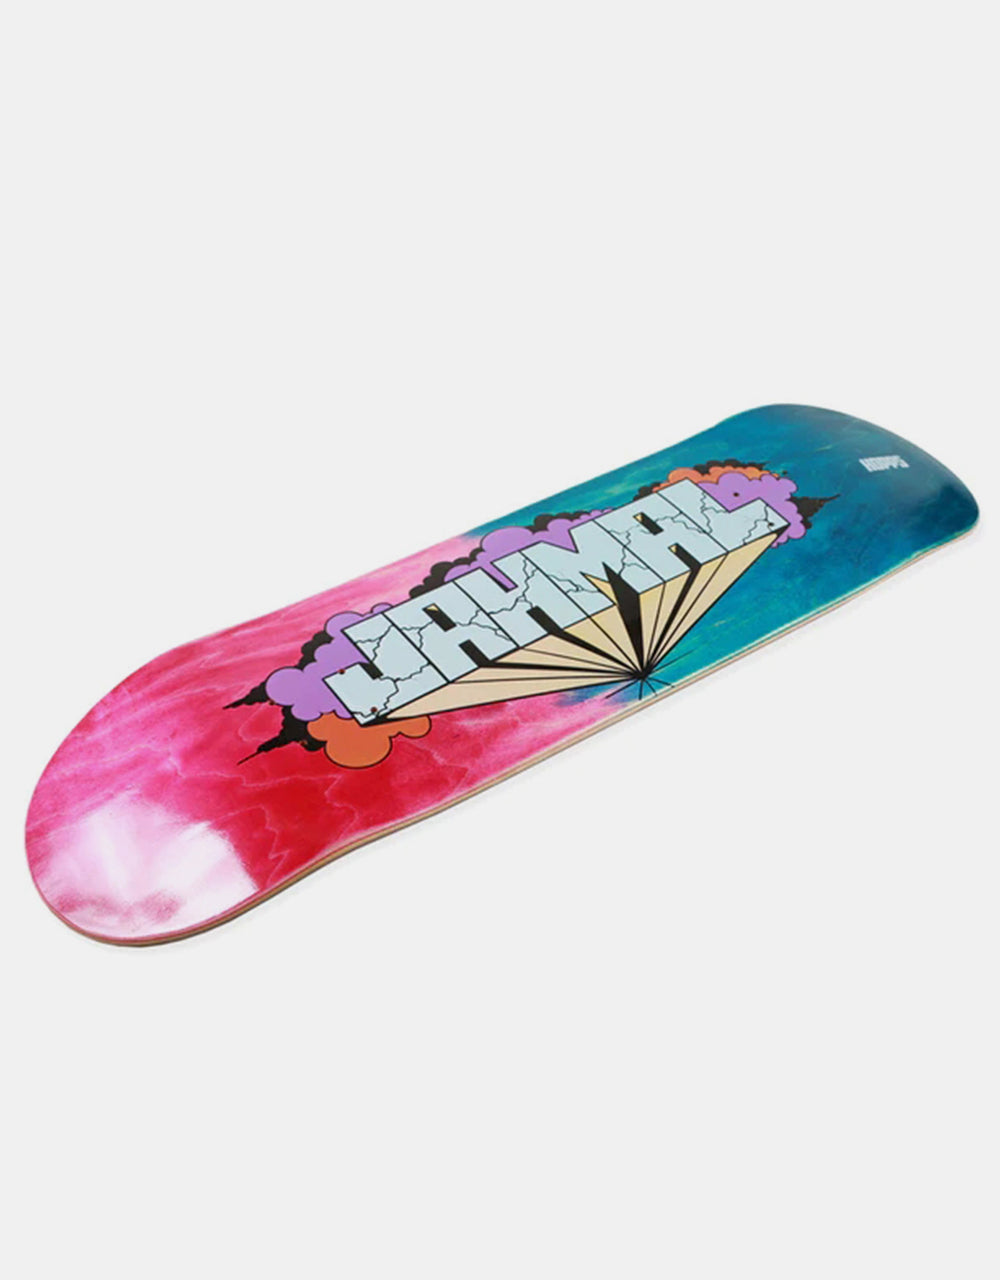 Hopps Williams Graff Skateboard Deck - 8.5"